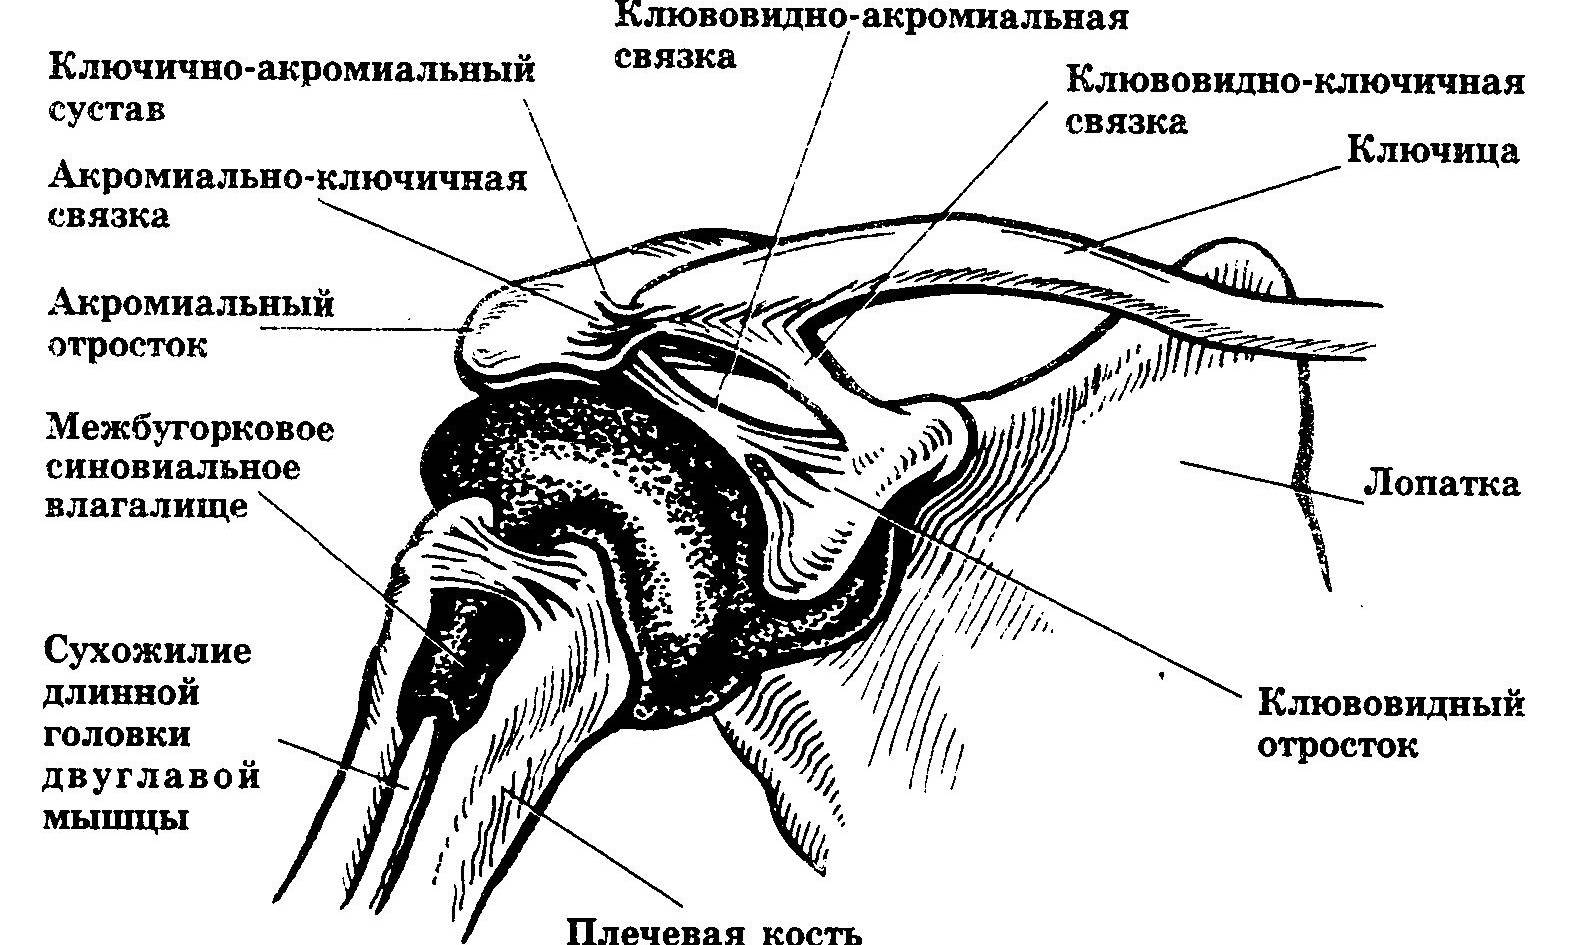 Связки акромиально-ключичного сустава анатомия